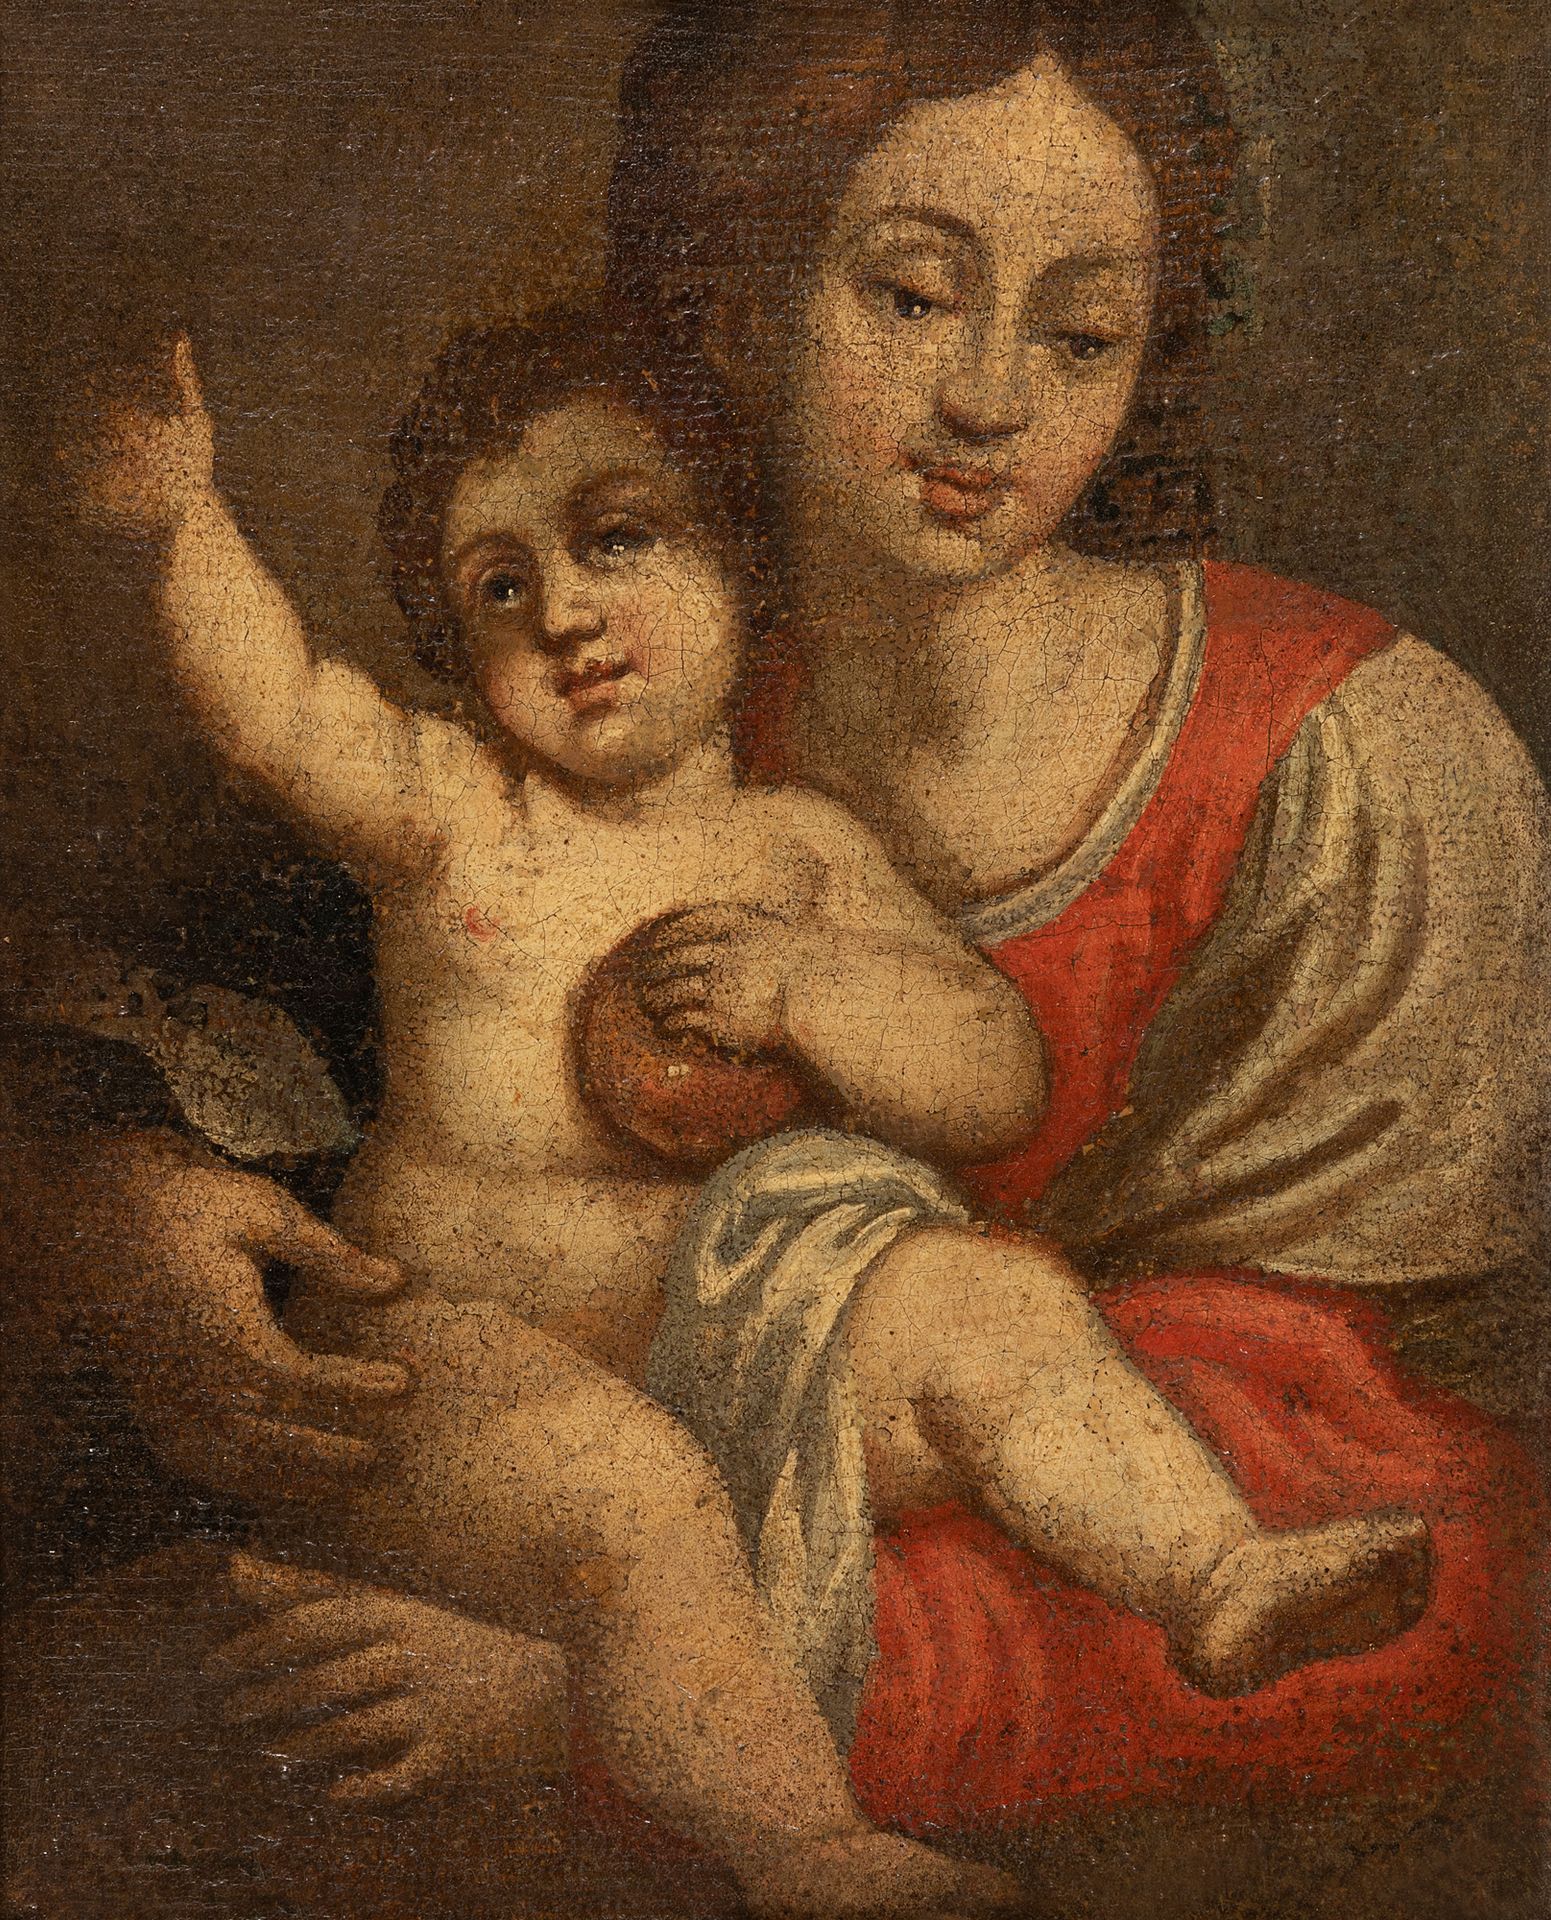 Null 18th century ITALIAN school

Maternity

Oil on canvas

27,5 x 22,5 cm